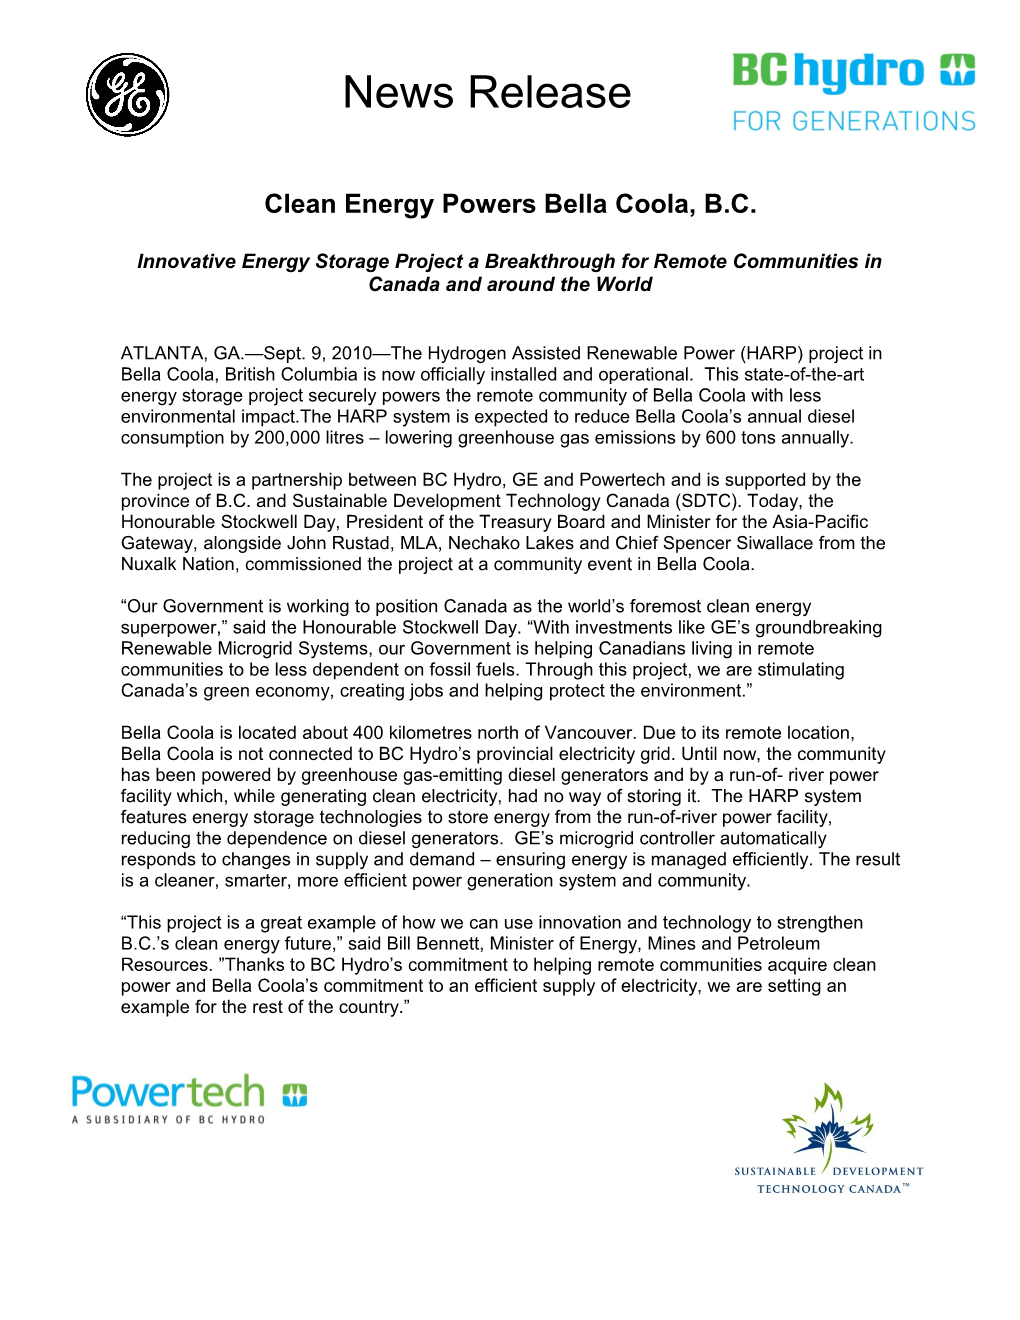 Clean Energy Powers Bella Coola, B.C